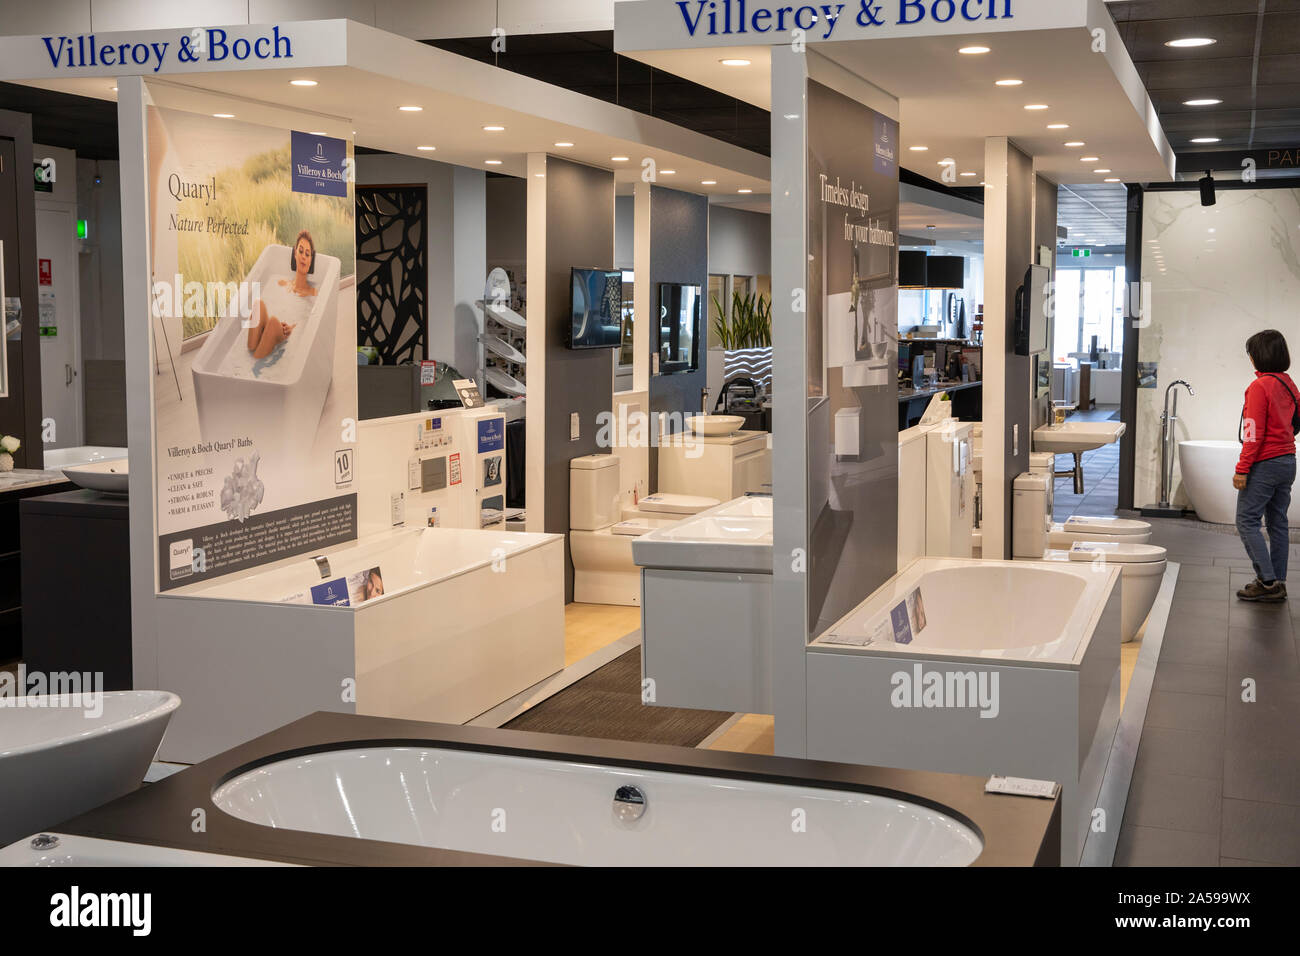 Villeroy And Boch Bathroom And Sanitaryware On Display In A Sydney Baths Showroom Australia Stock Photo Alamy